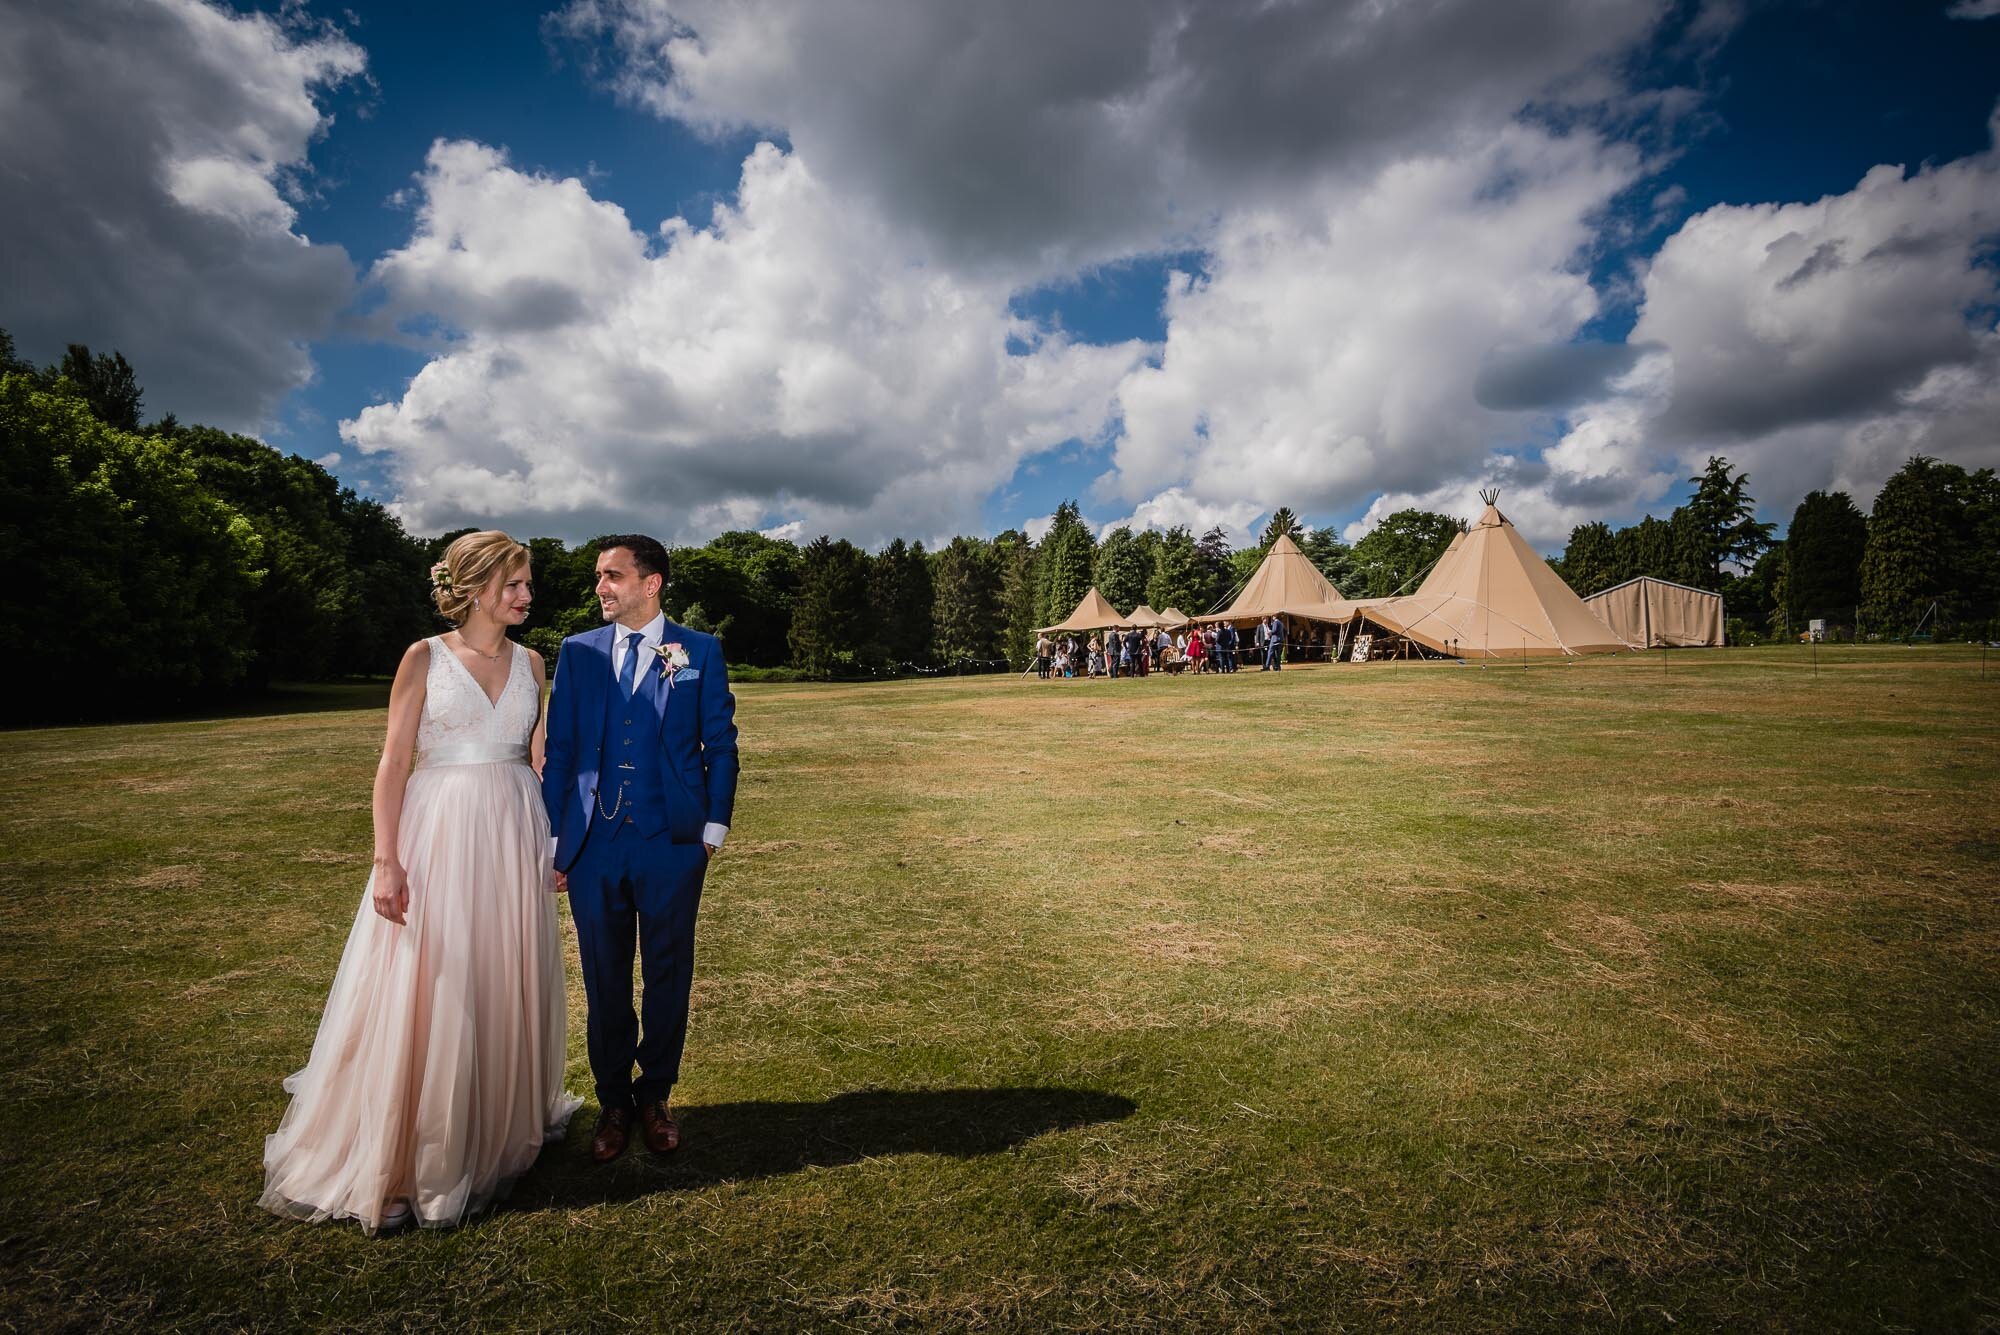 wedding-photography-country-tipis-hertford-hertfordshire-pike-photography-2020-24.jpg